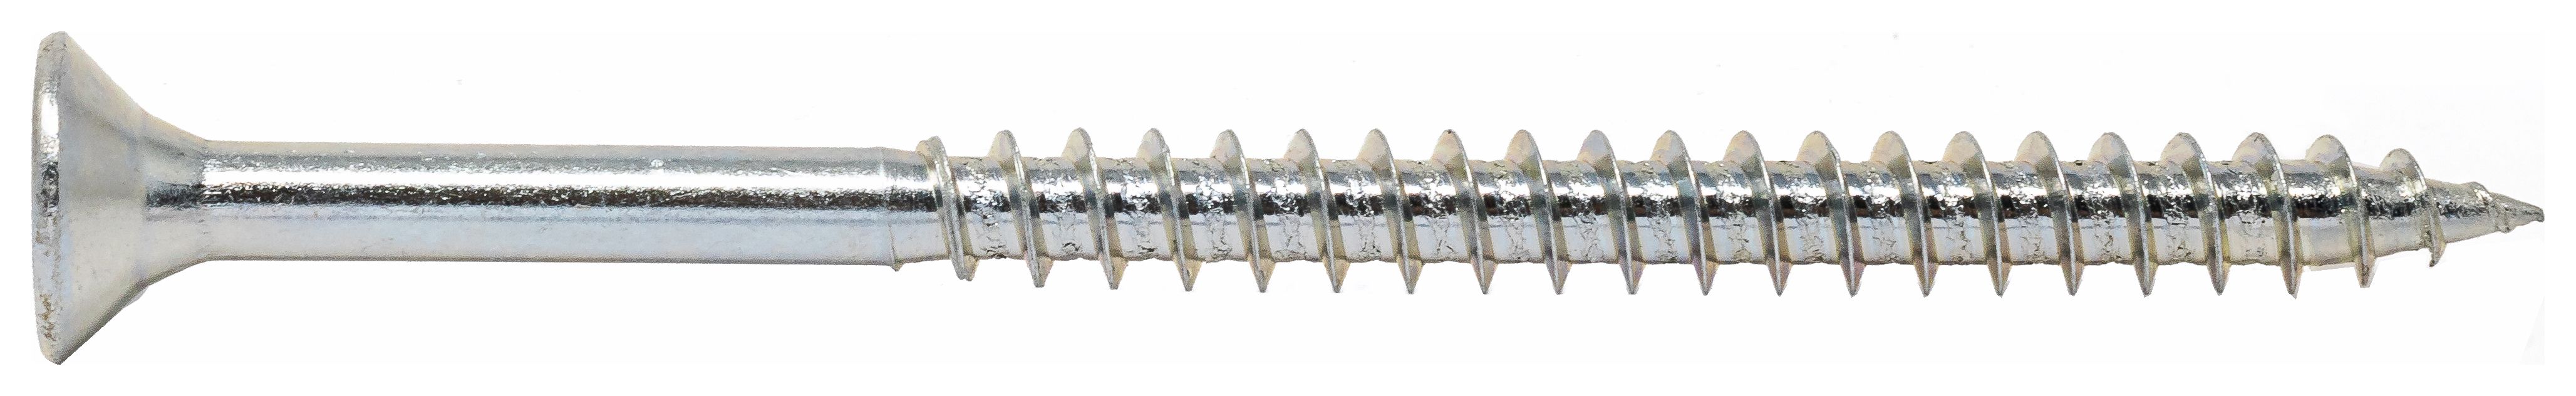 Wickes Single Thread Zinc Plated Screw - 5 X 30mm Pack Of 200